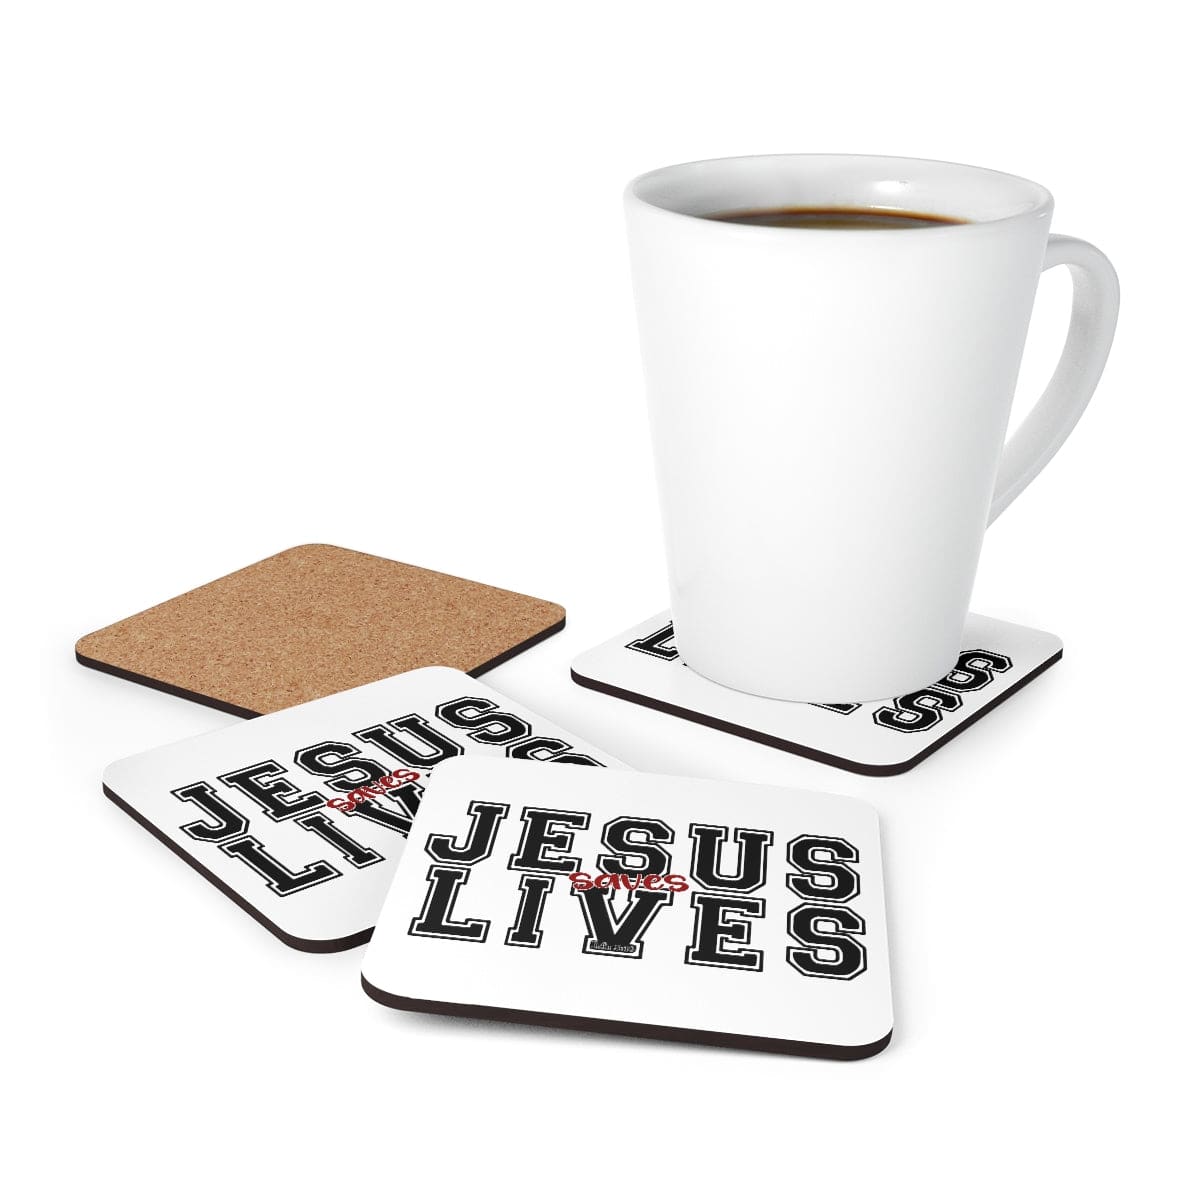 Home Decor Coaster Set - 4 Piece Home/office Jesus Saves Lives Christian